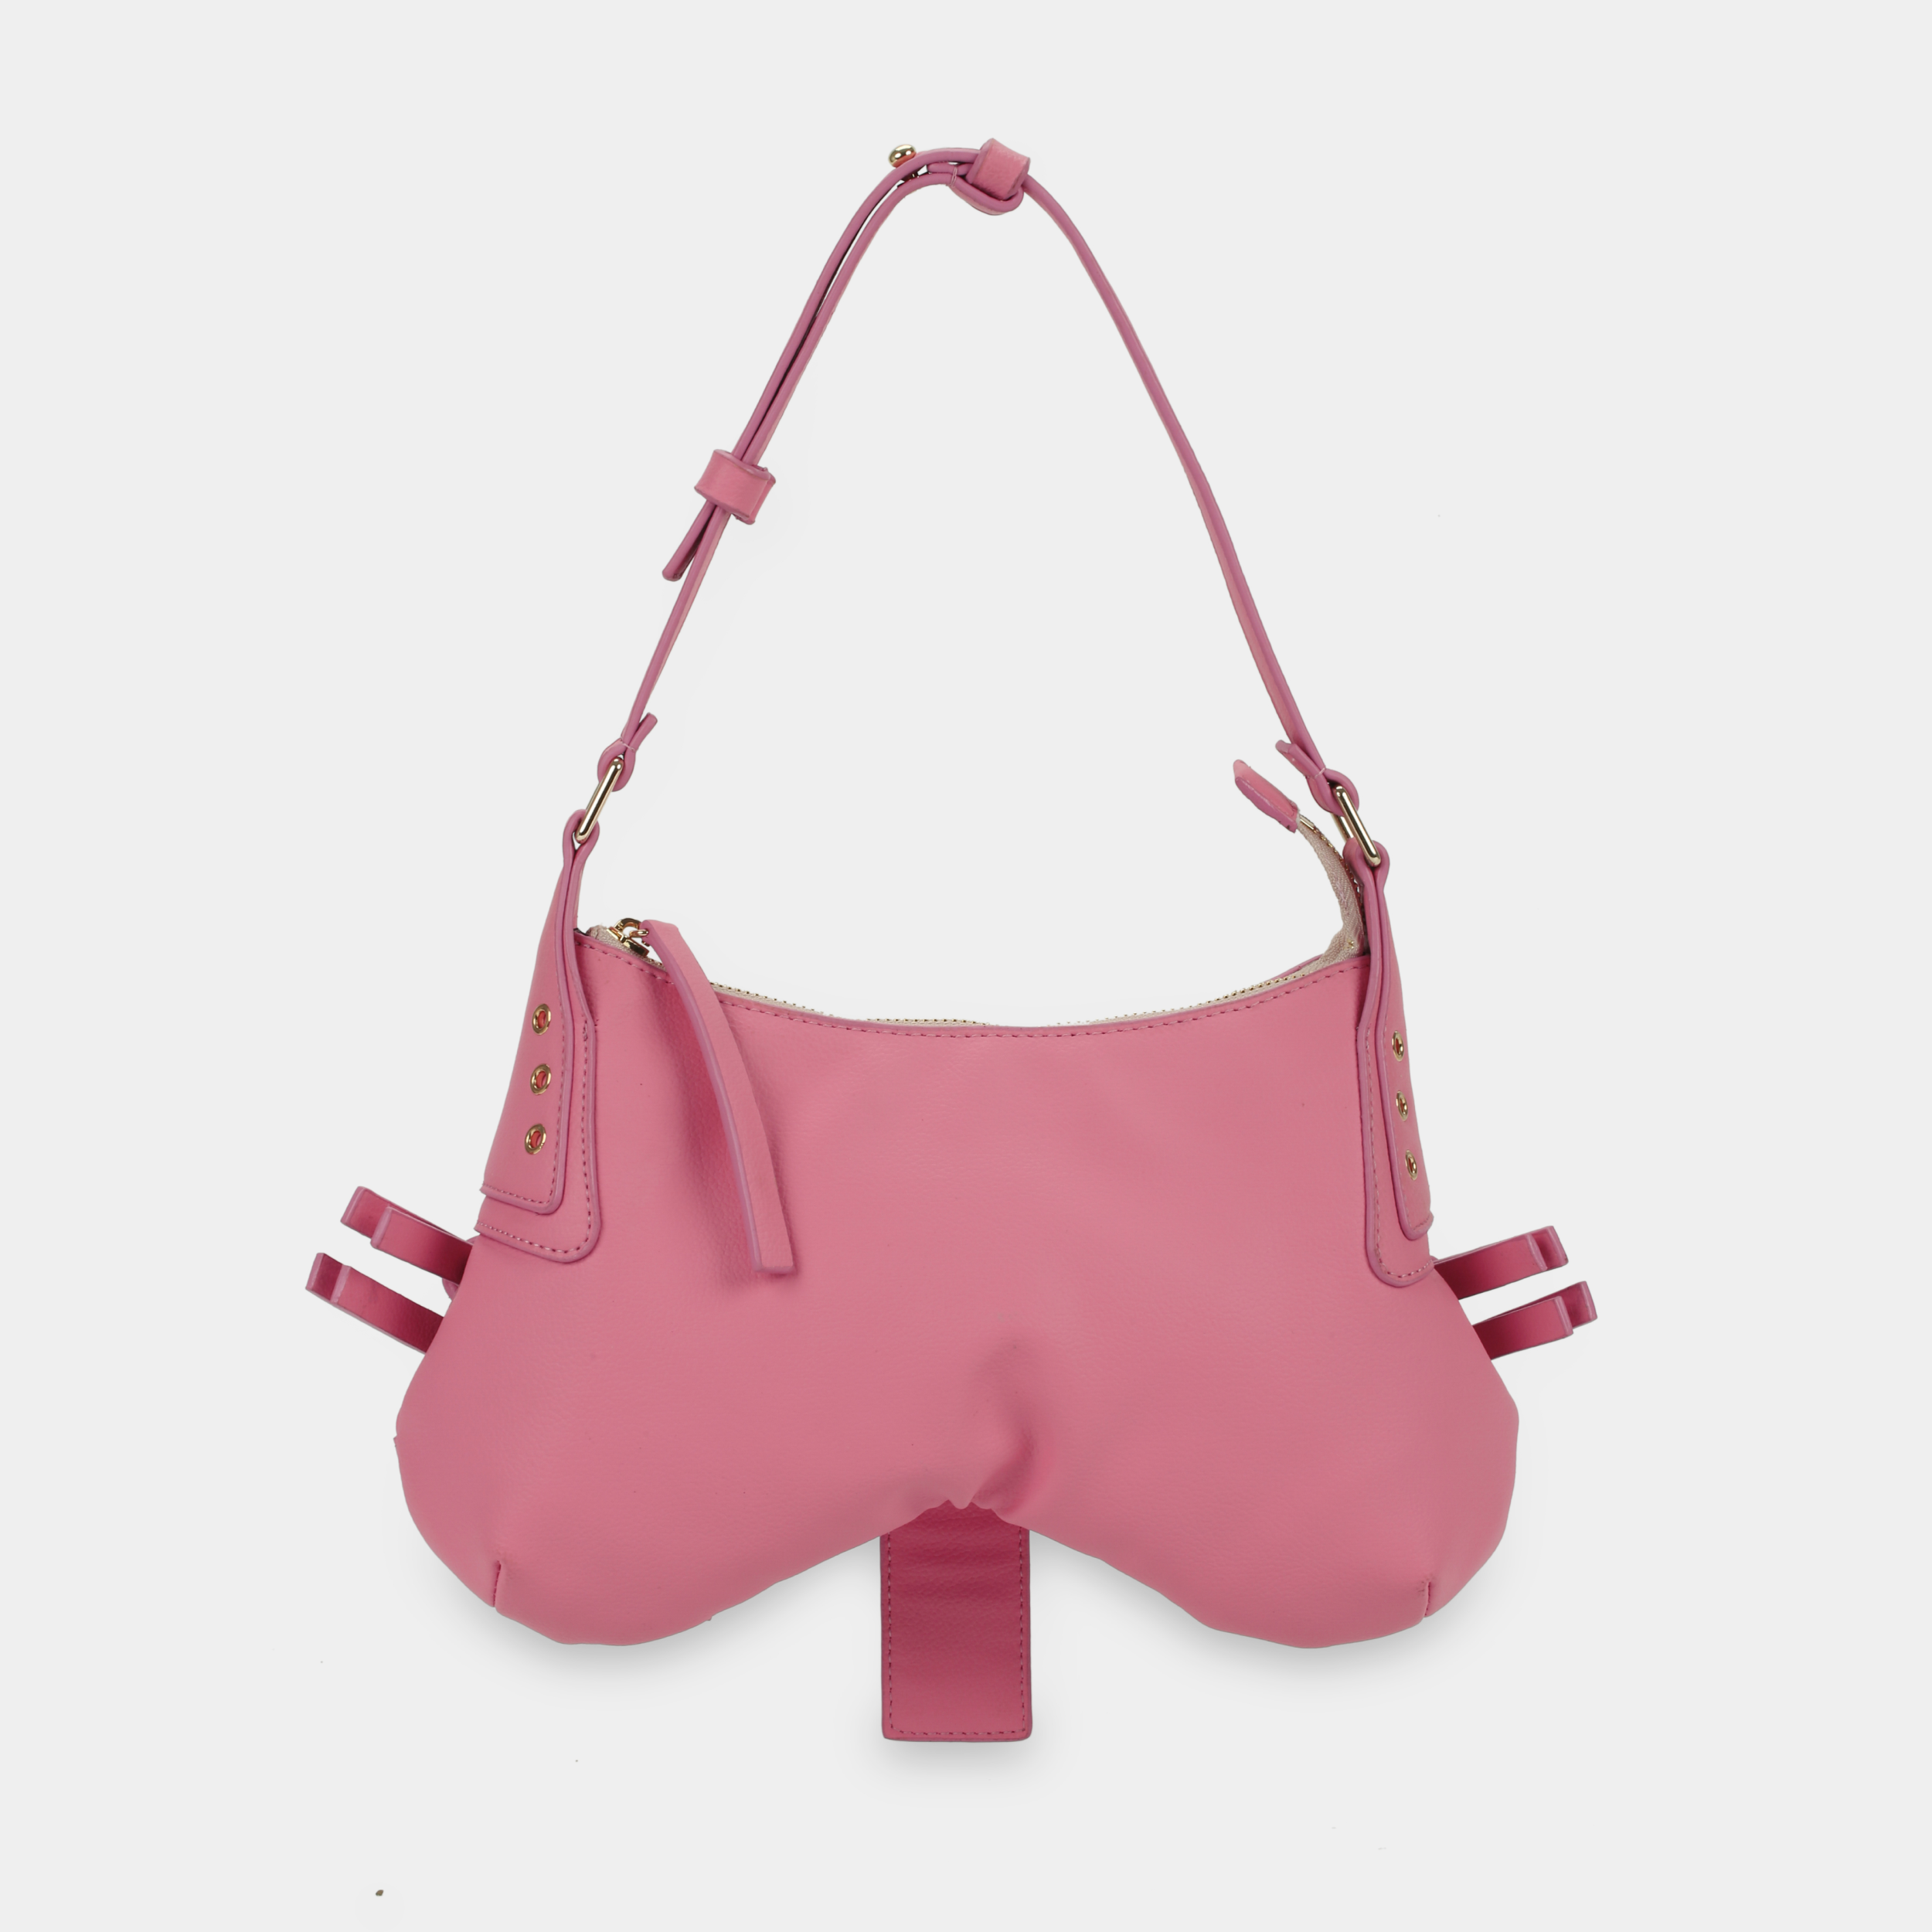 BUTTERFLY Handbag in Pastel Pink